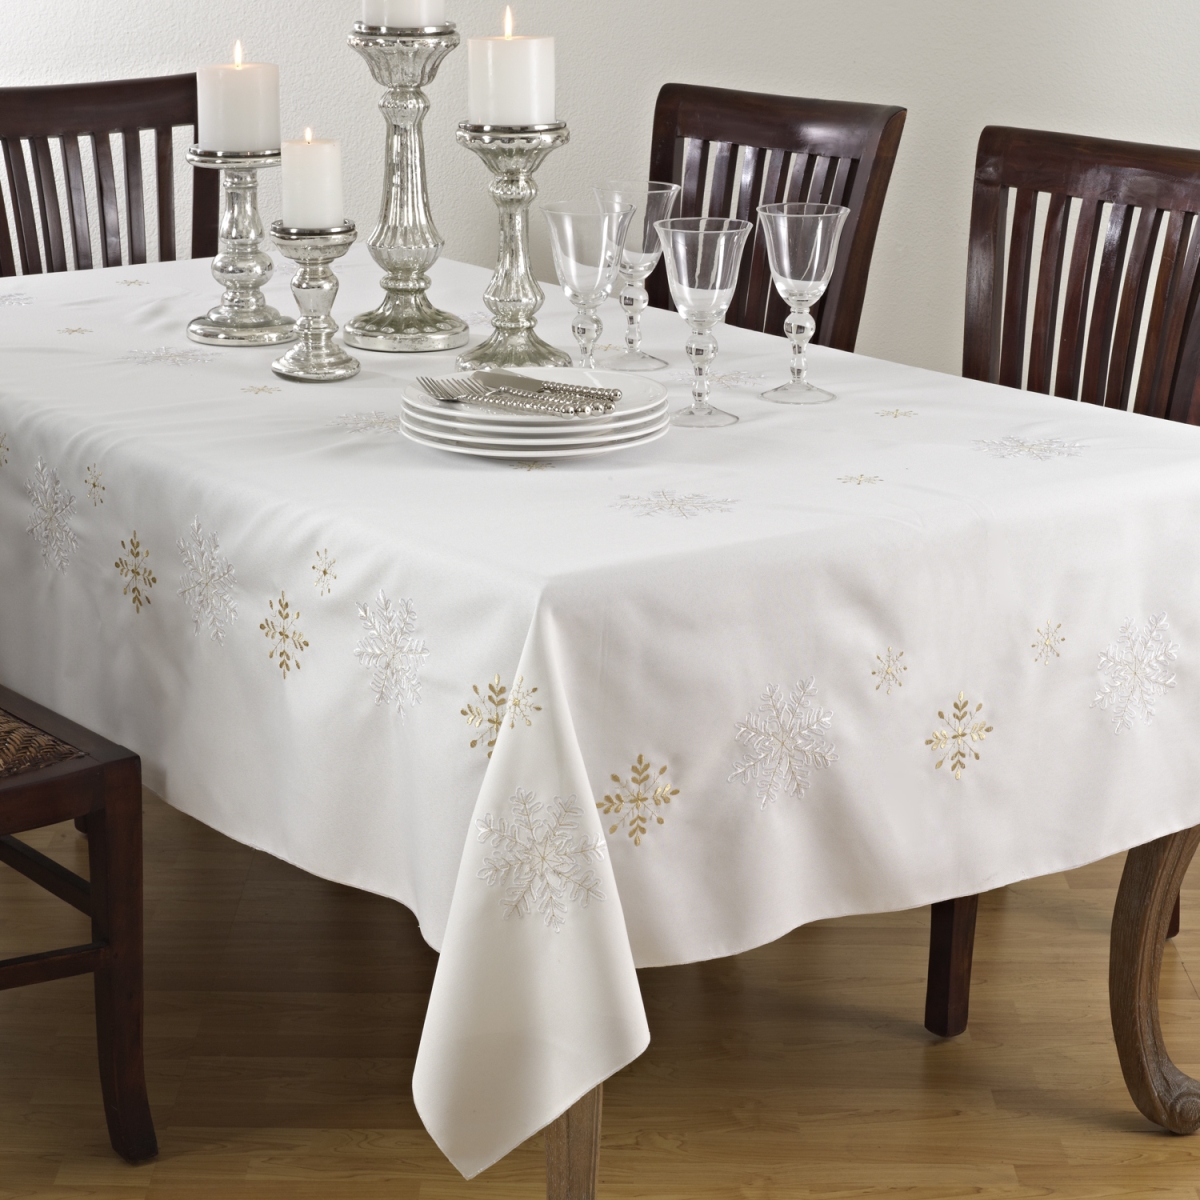 Cookhouse SARO  70 x 140 in. Rectangular Snowflake Design Table Linens - Ivory